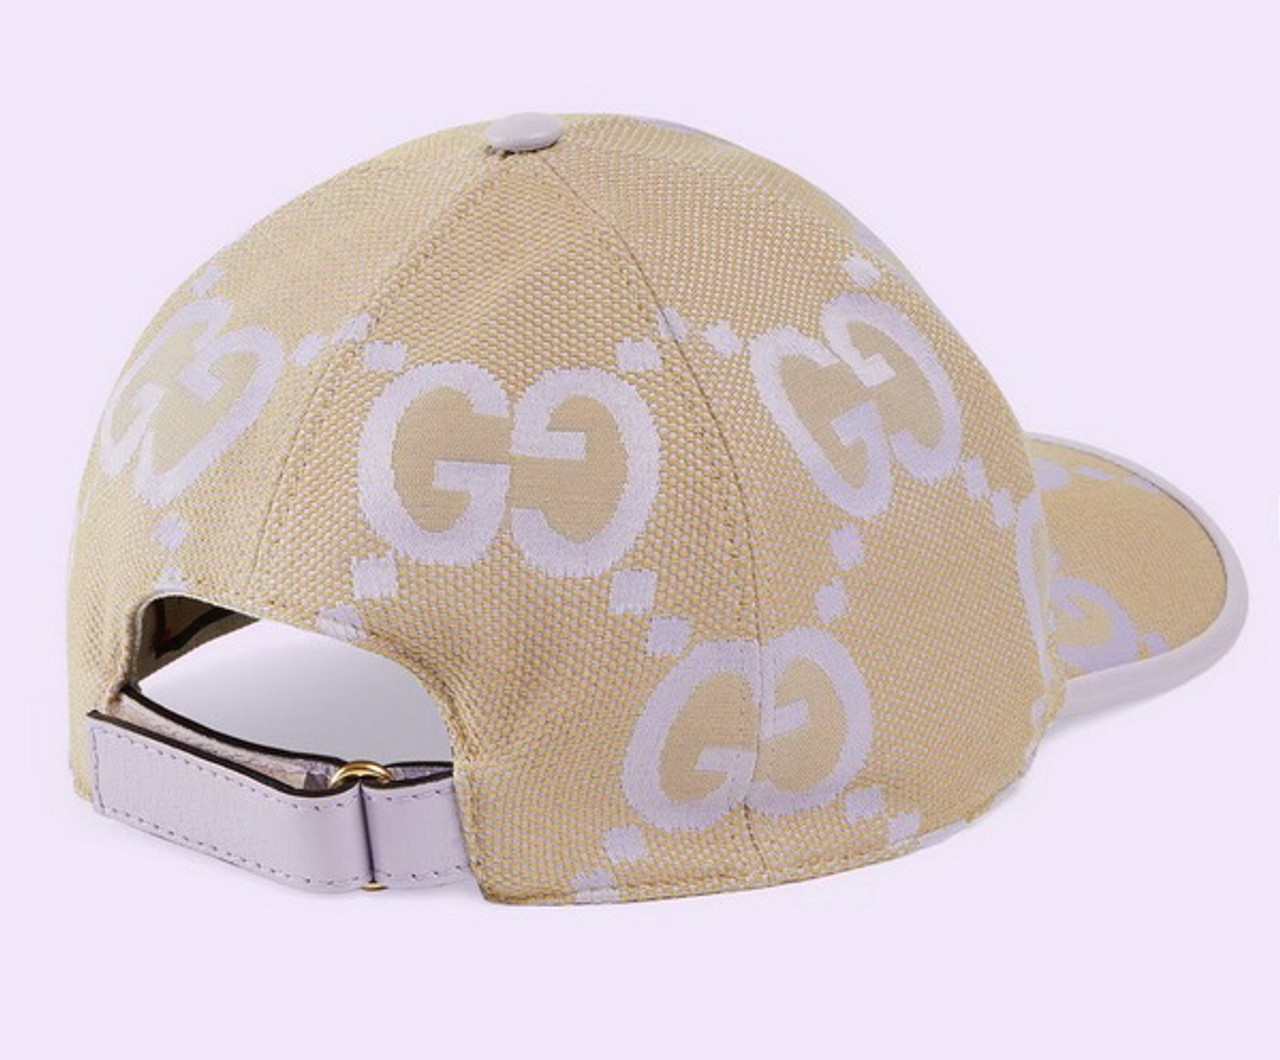 Gucci Gg Canvas Baseball Hat - Purple